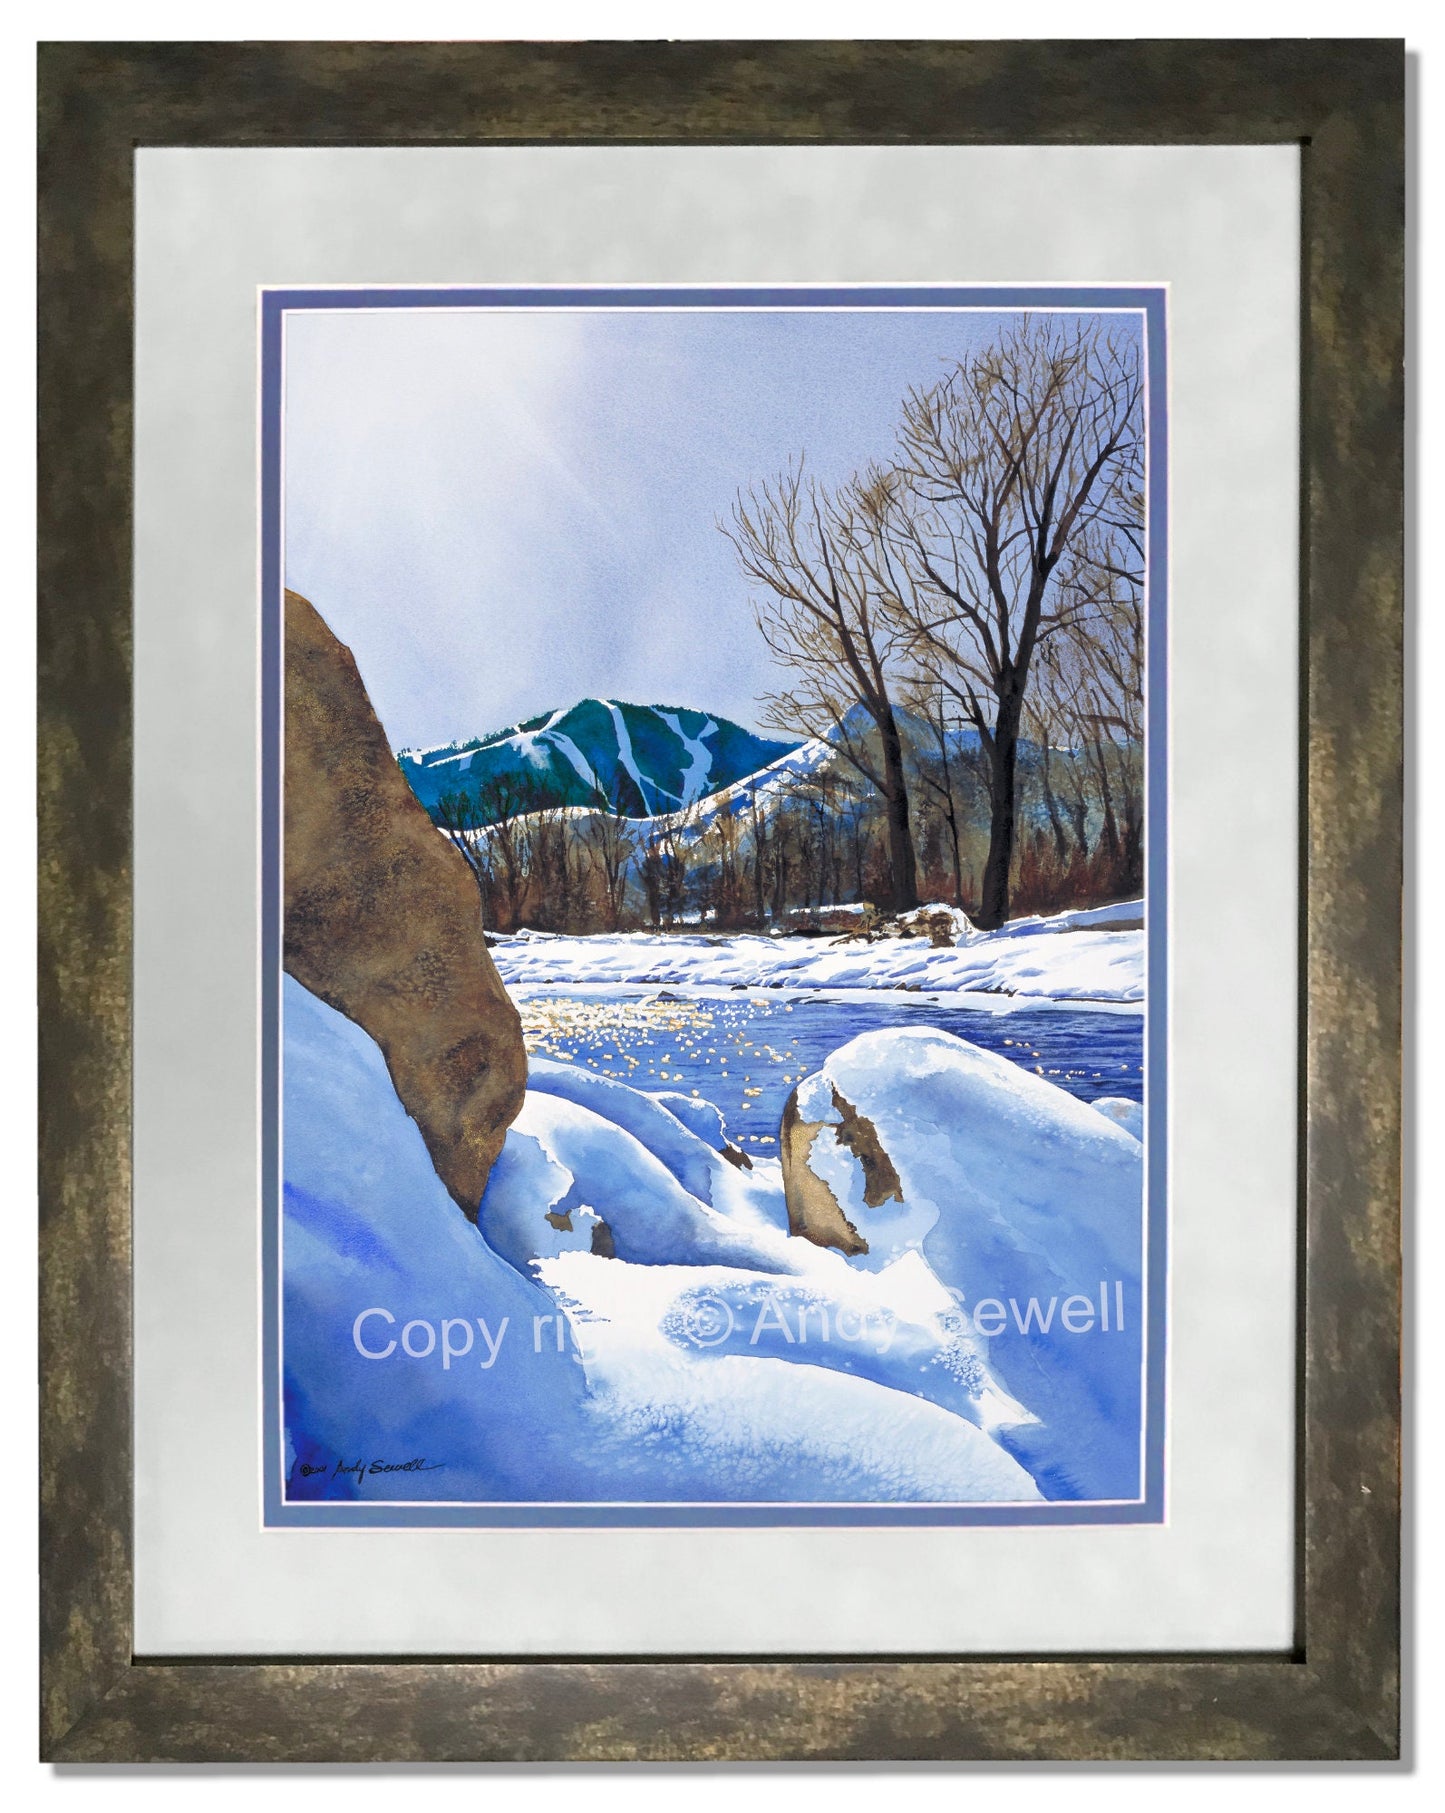 "Valley Winter Sun" - a Original watercolor or ltd. edition Giclee reprod. of Sun Valley's Bald Mtn.